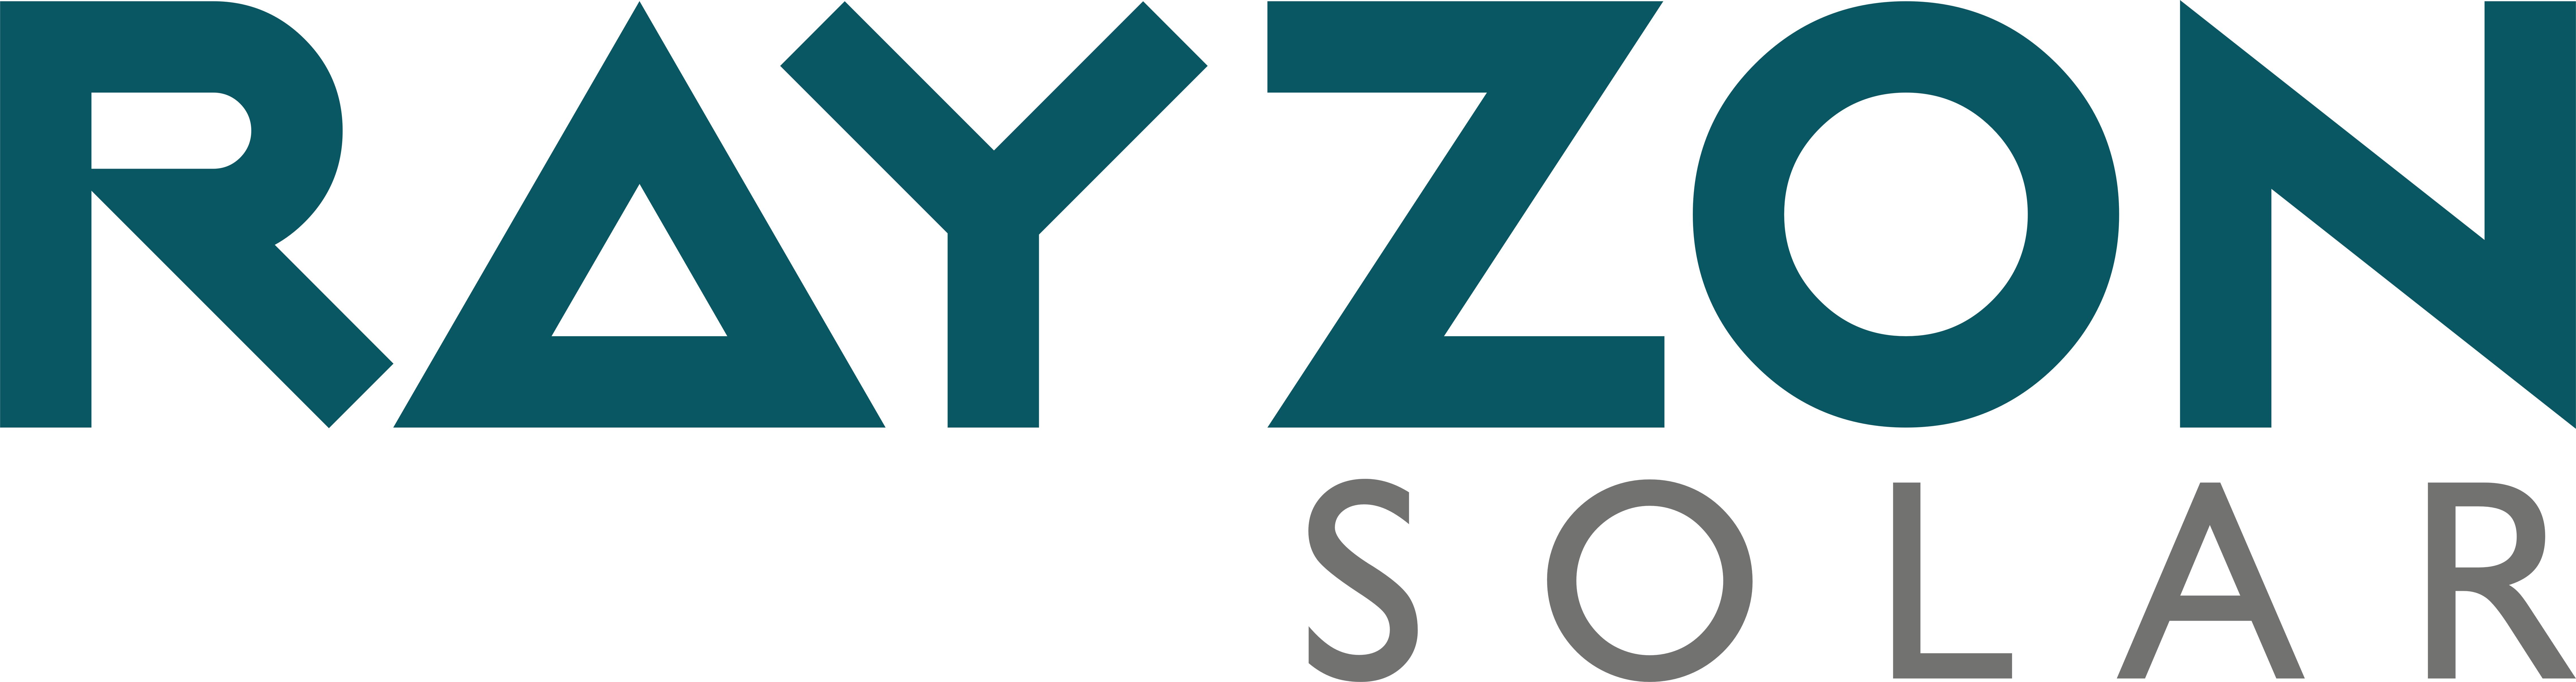 Rayzon Solar Footer Logo